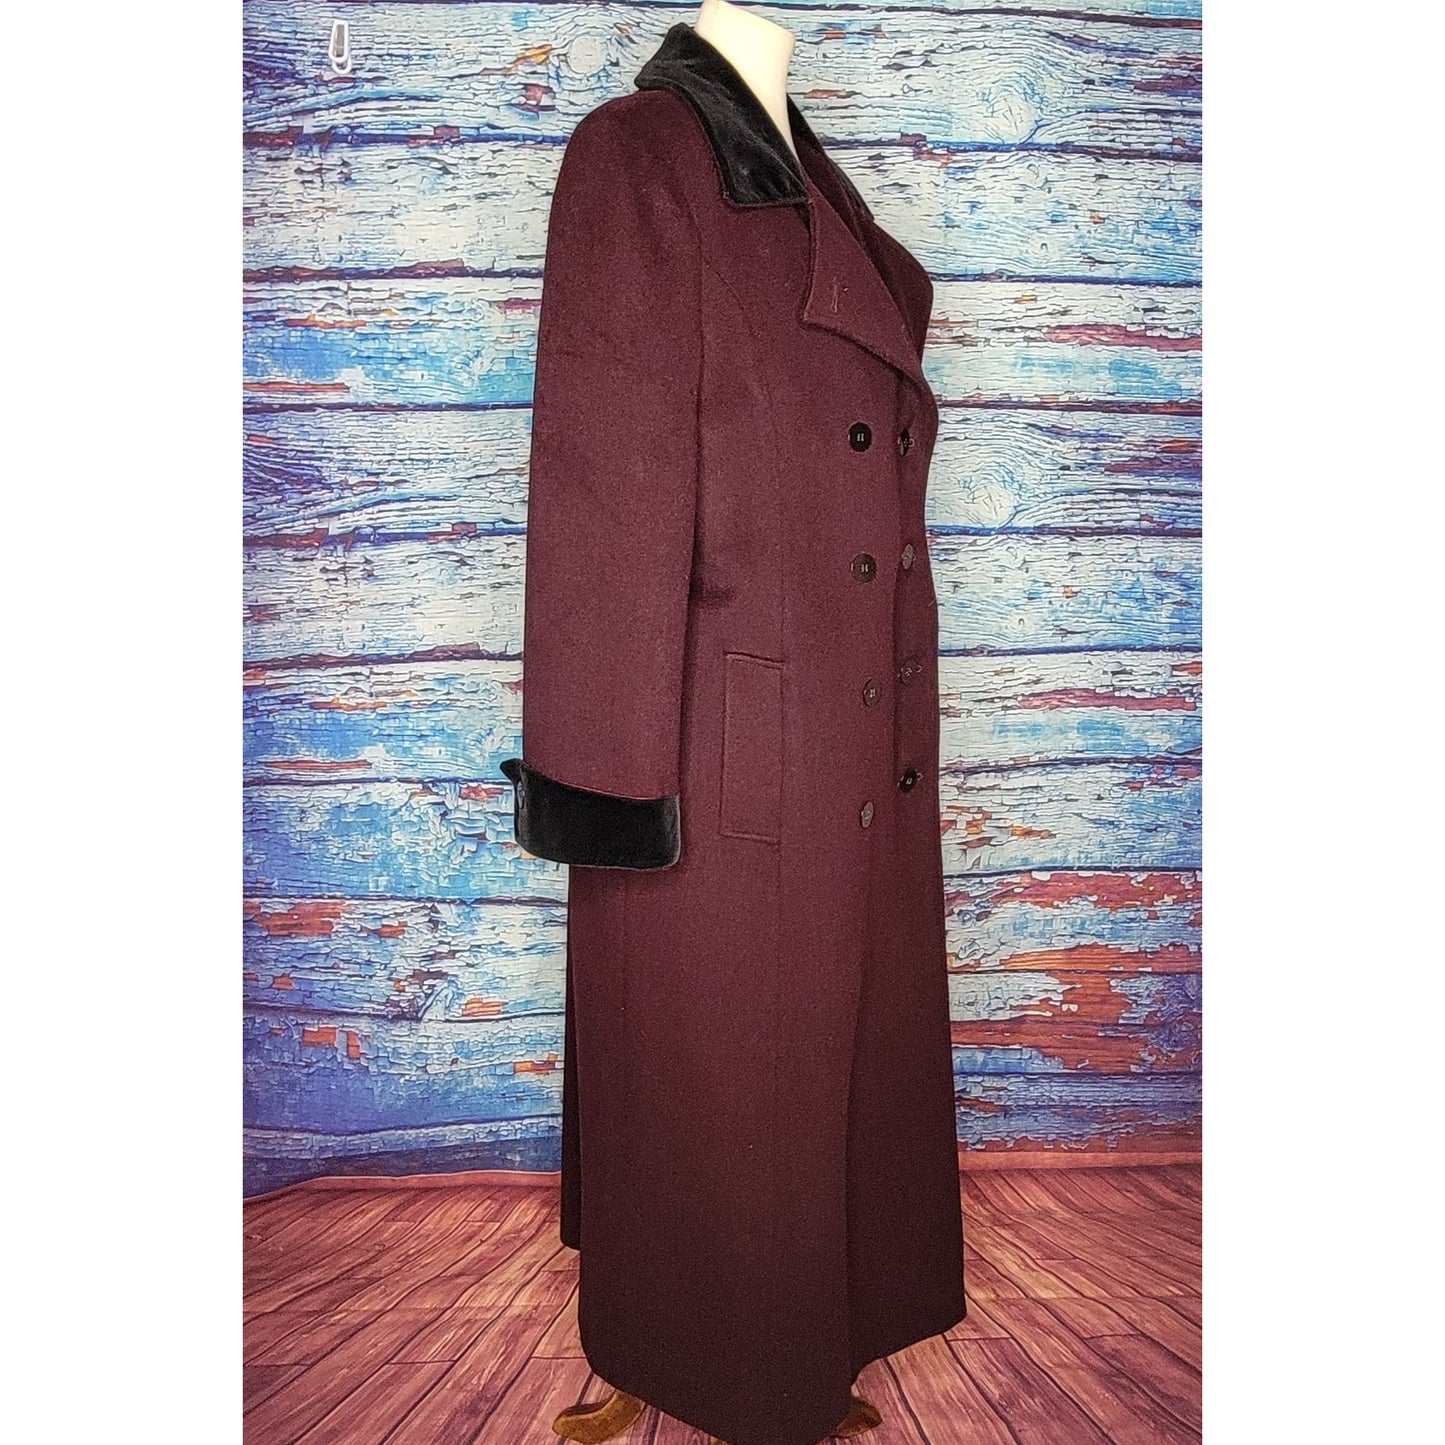 VTG Full Length Plum Colored Wool Coat w/ Velour collar and sleeves